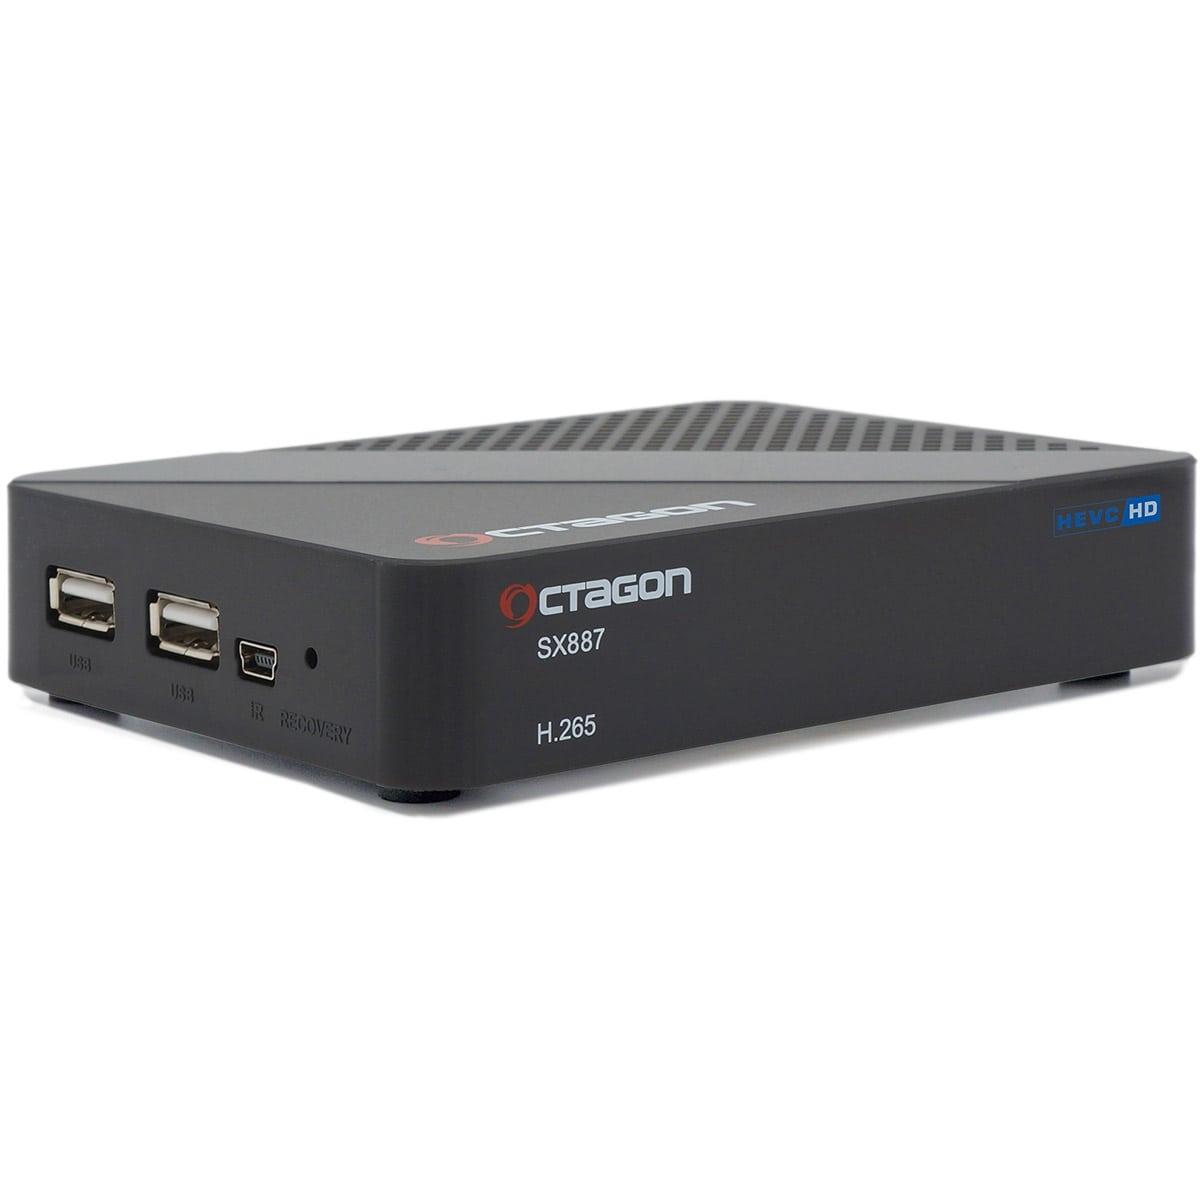 OCTAGON Octagon 1080p LAN (Schwarz) Mediaplayer Full HD IP-Receiver Linux SX887 H.265